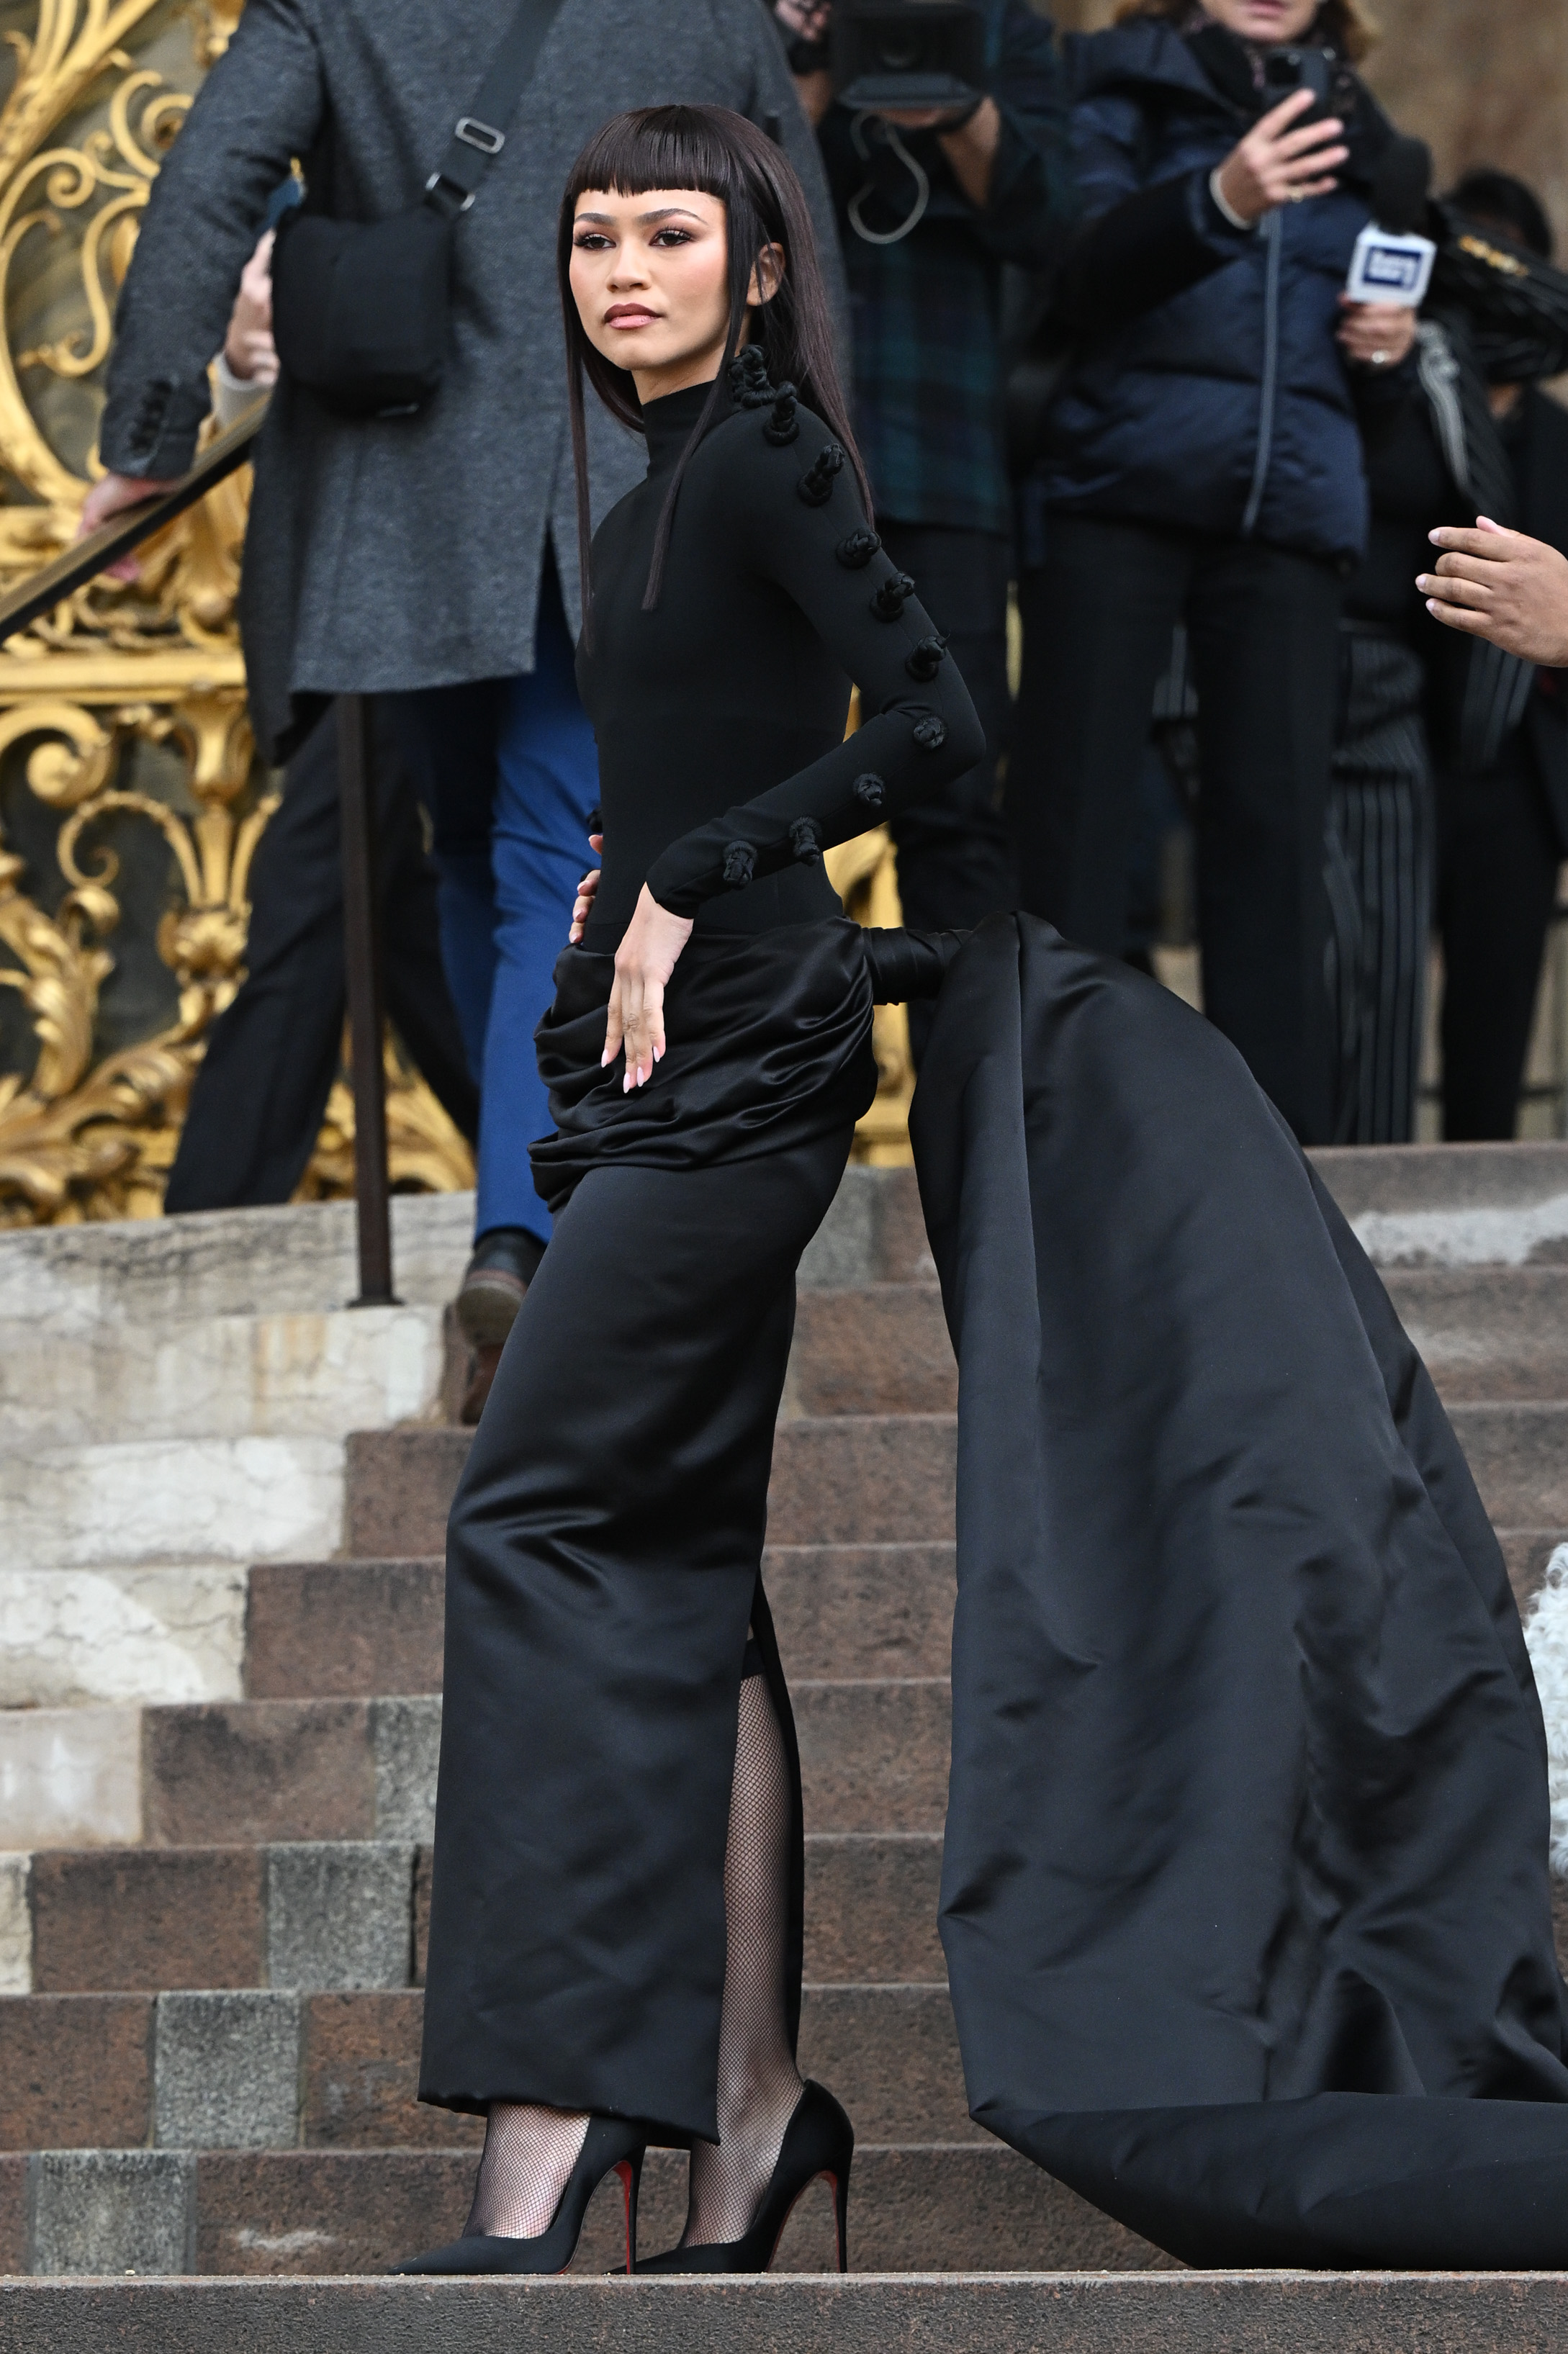 Zendaya wearing a black Schiaparelli look with a maxi-length duchesse satin skirt and train.